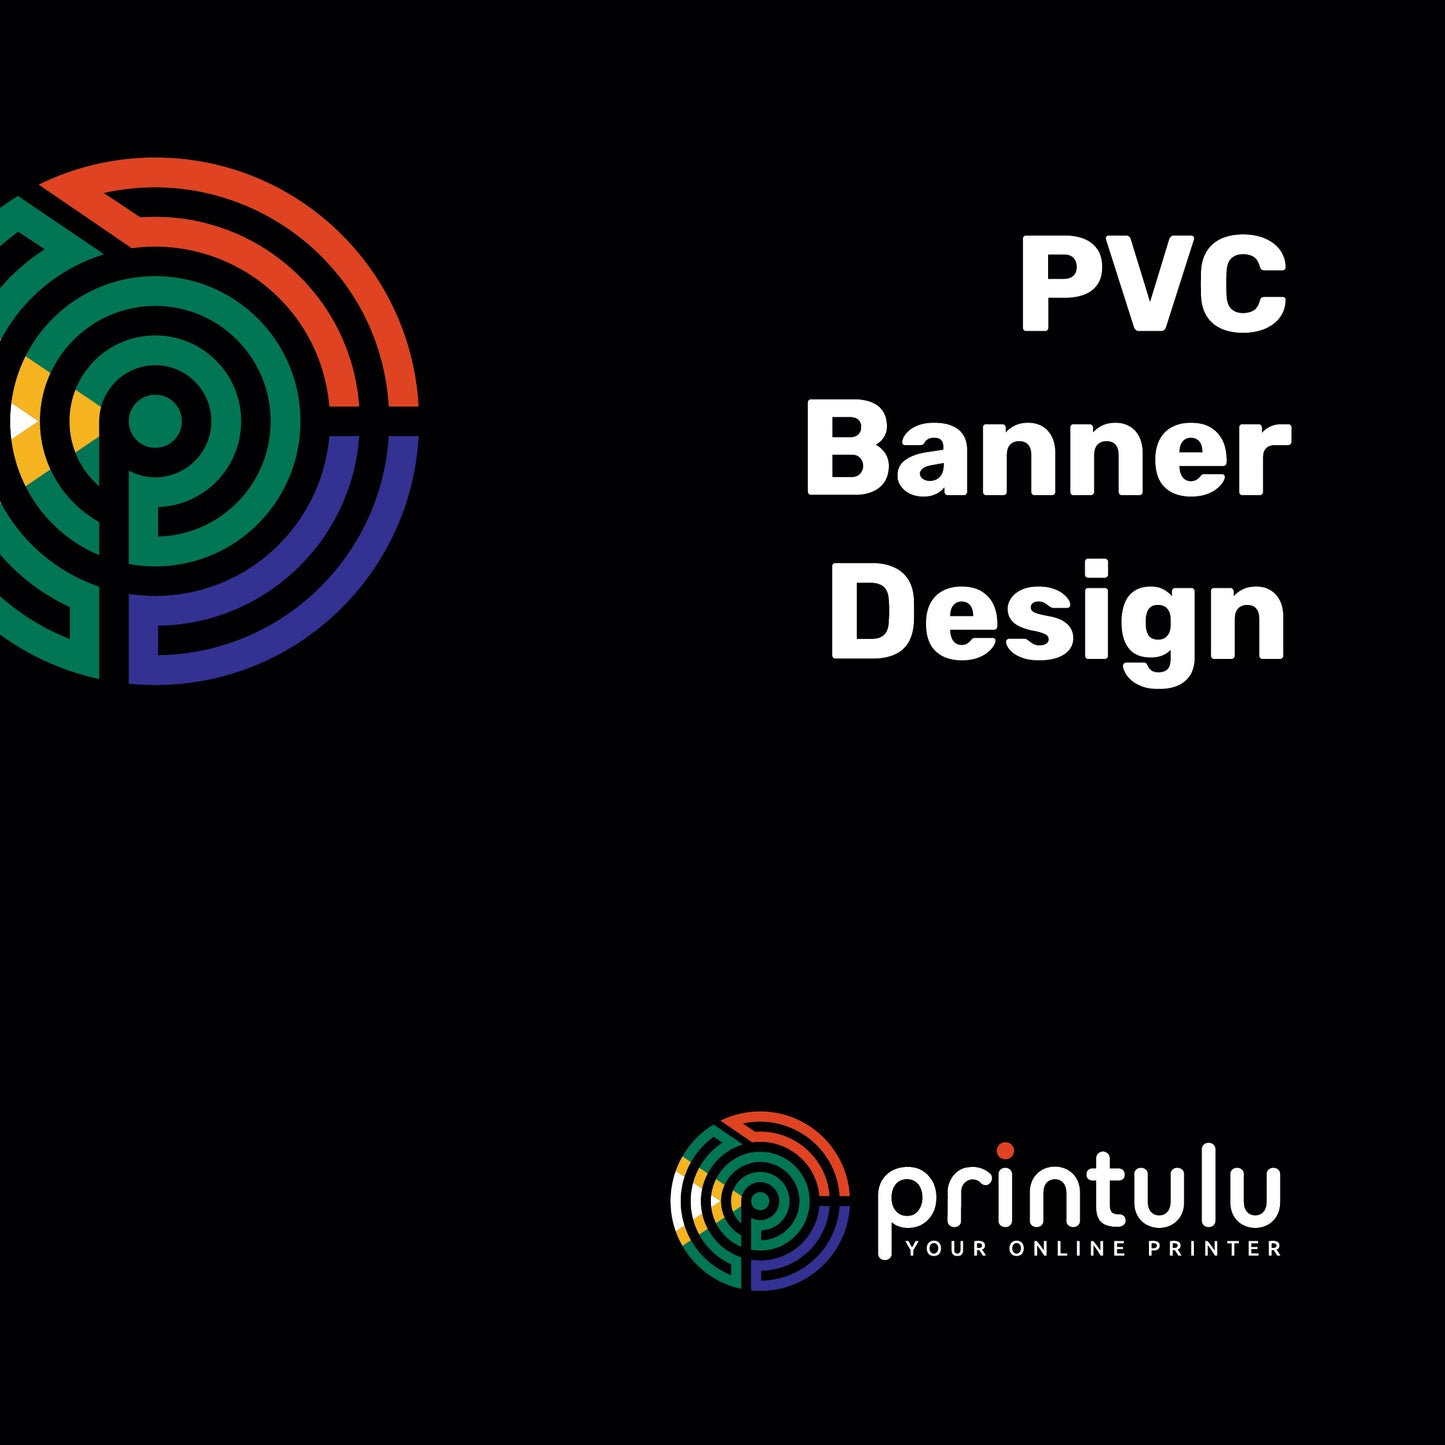 PVC Banner Design